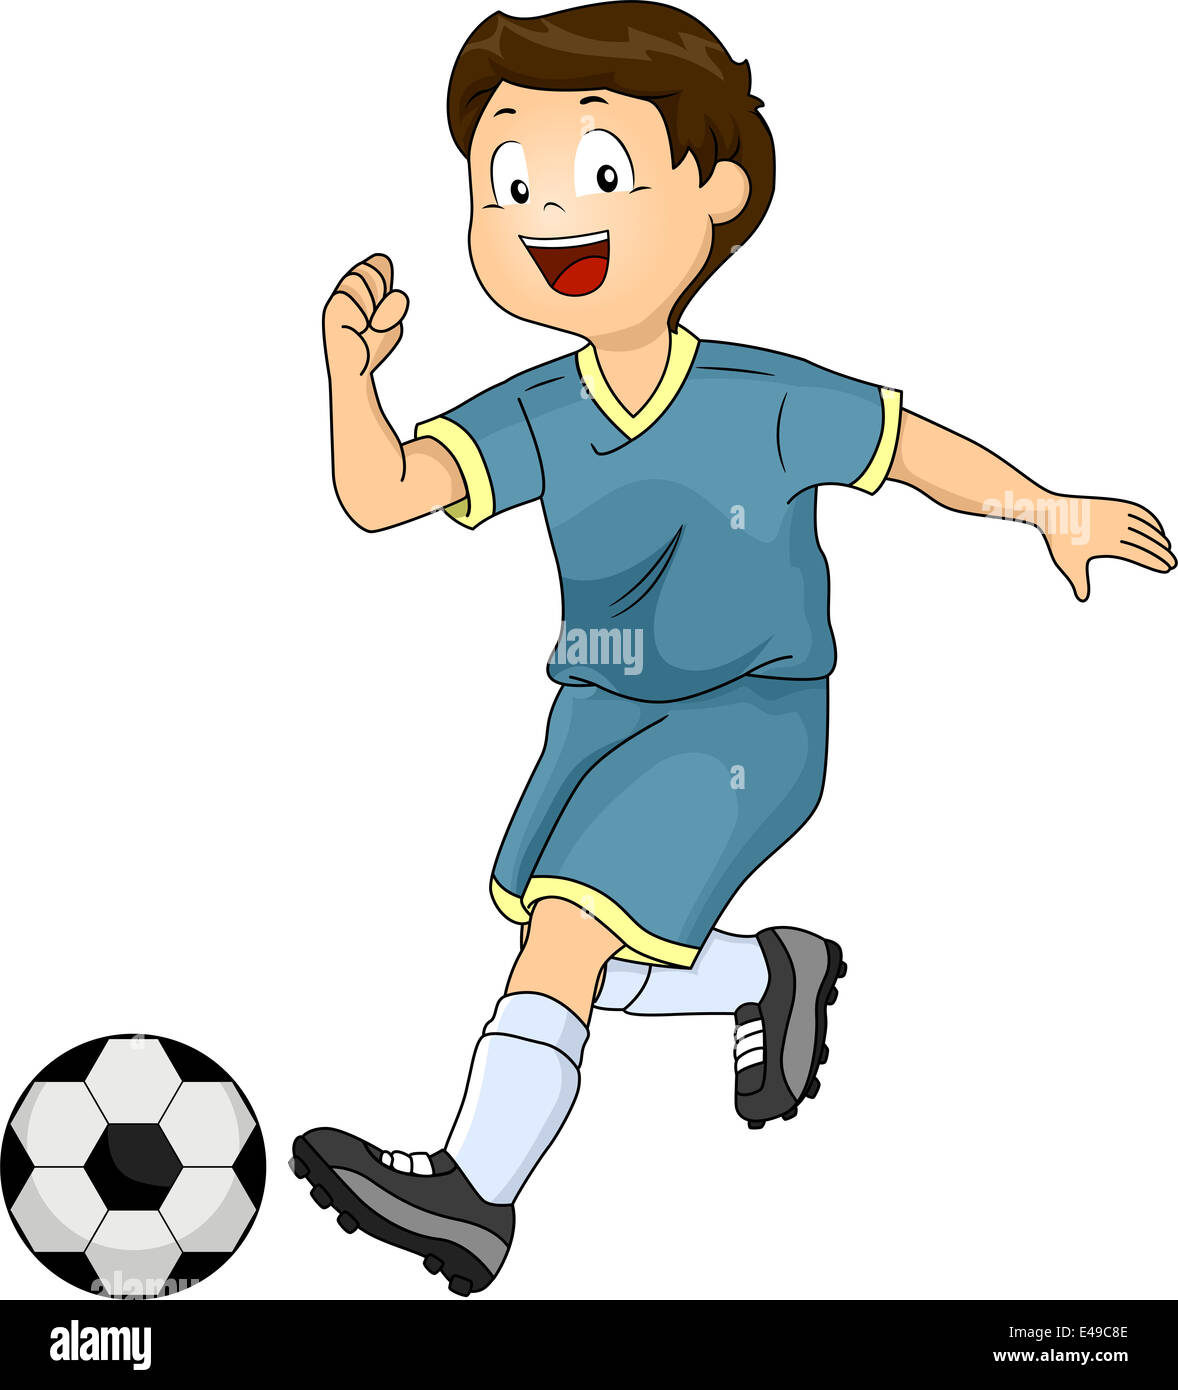 Illustration of a Little Boy Kicking a Soccer Ball Stock Photo - Alamy